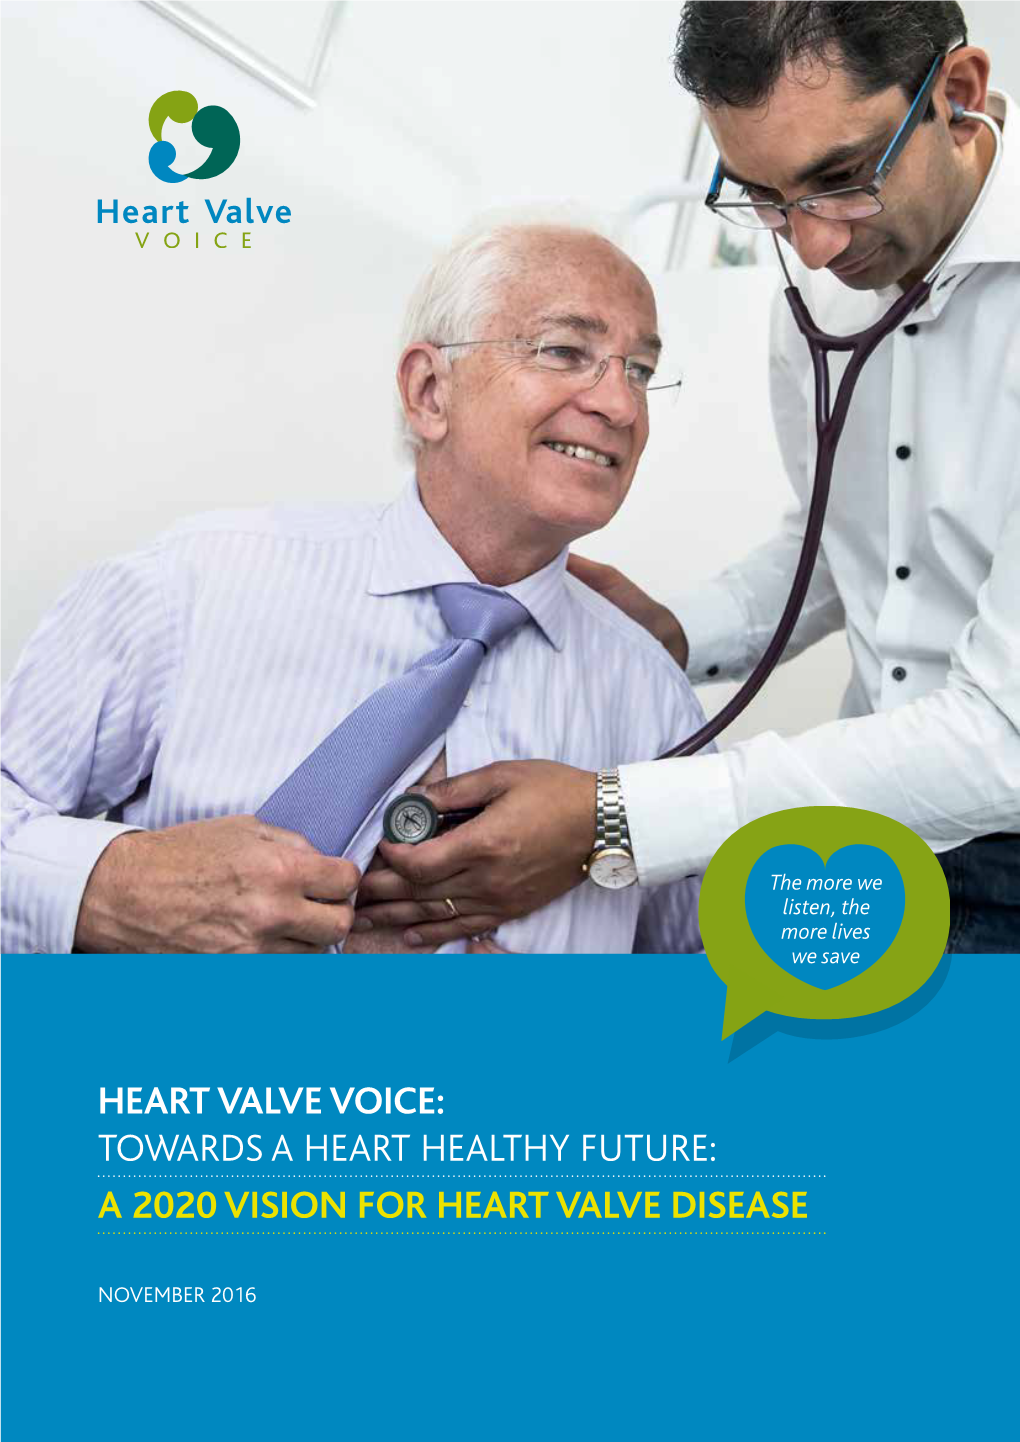 Towards a Heart Healthy Future: a 2020 Vision for Heart Valve Disease